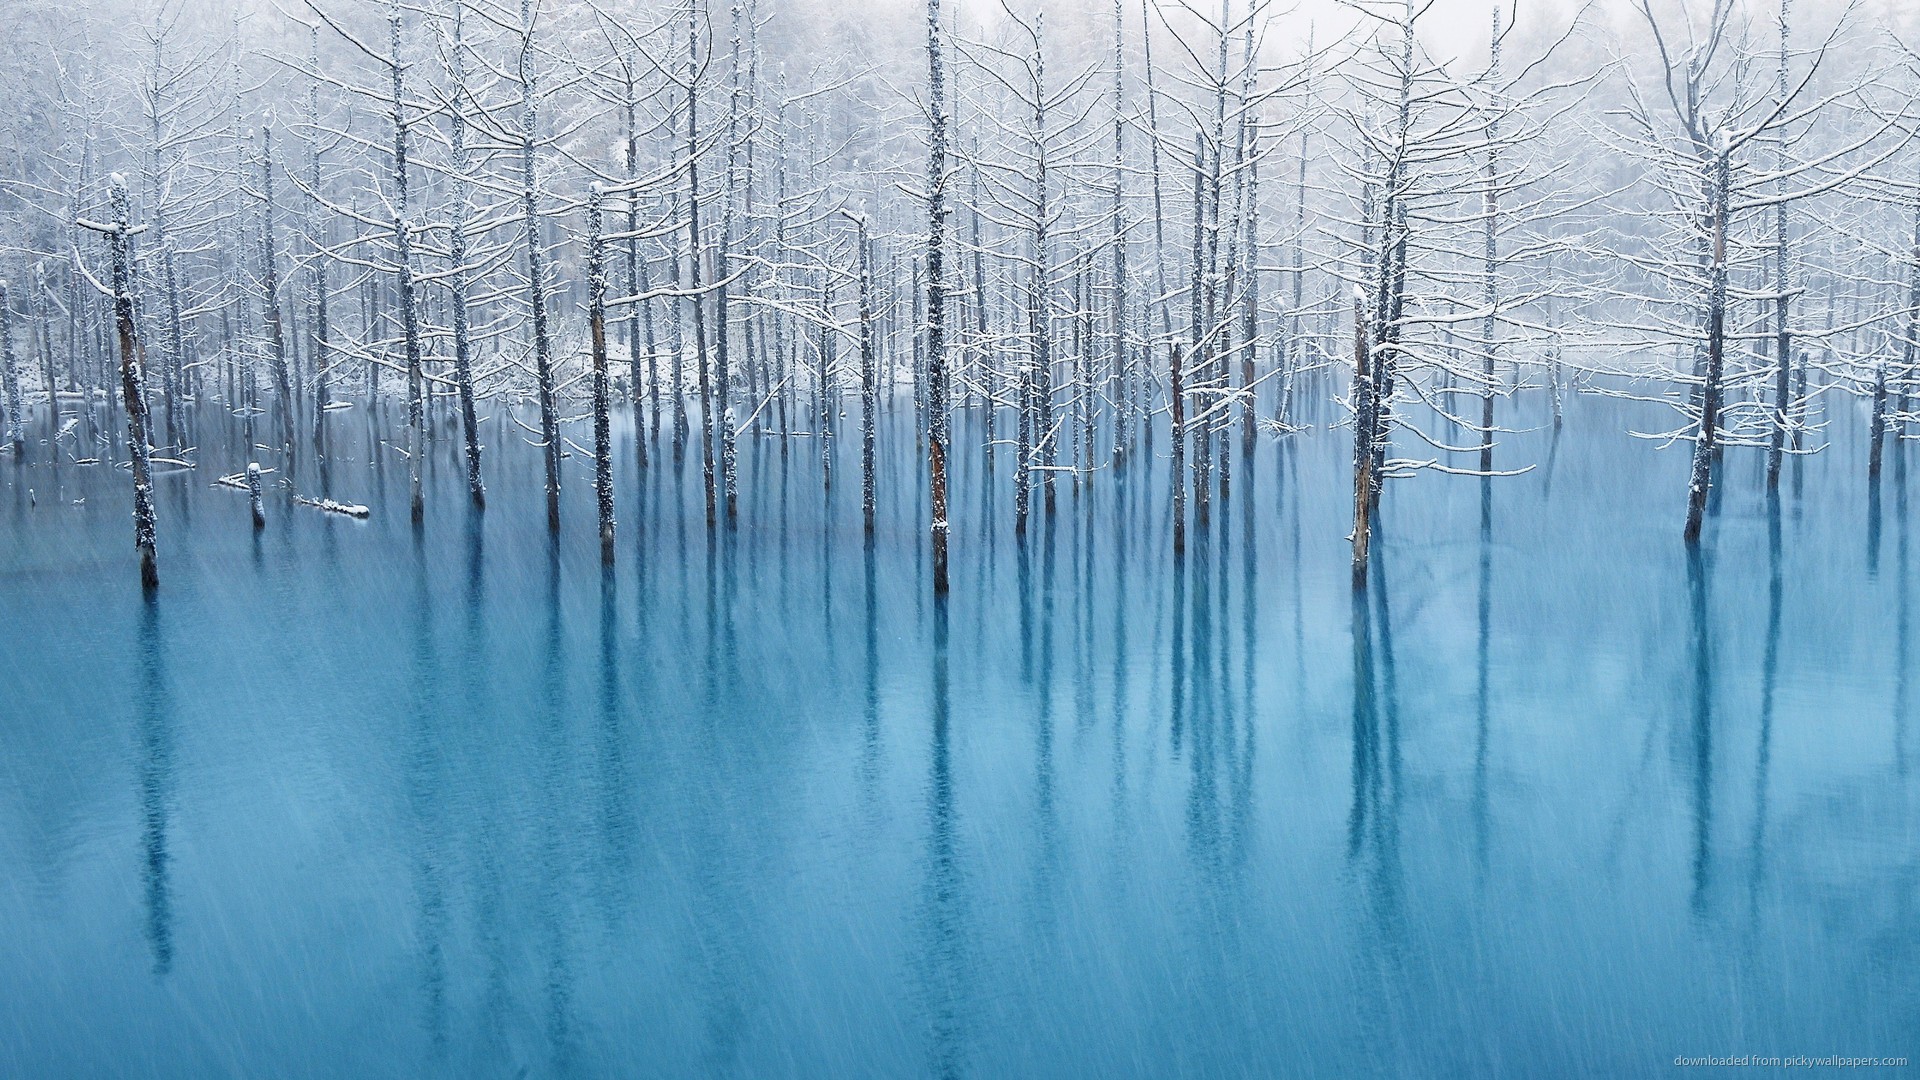 frozen-trees-in-blue-water - City of Woburn